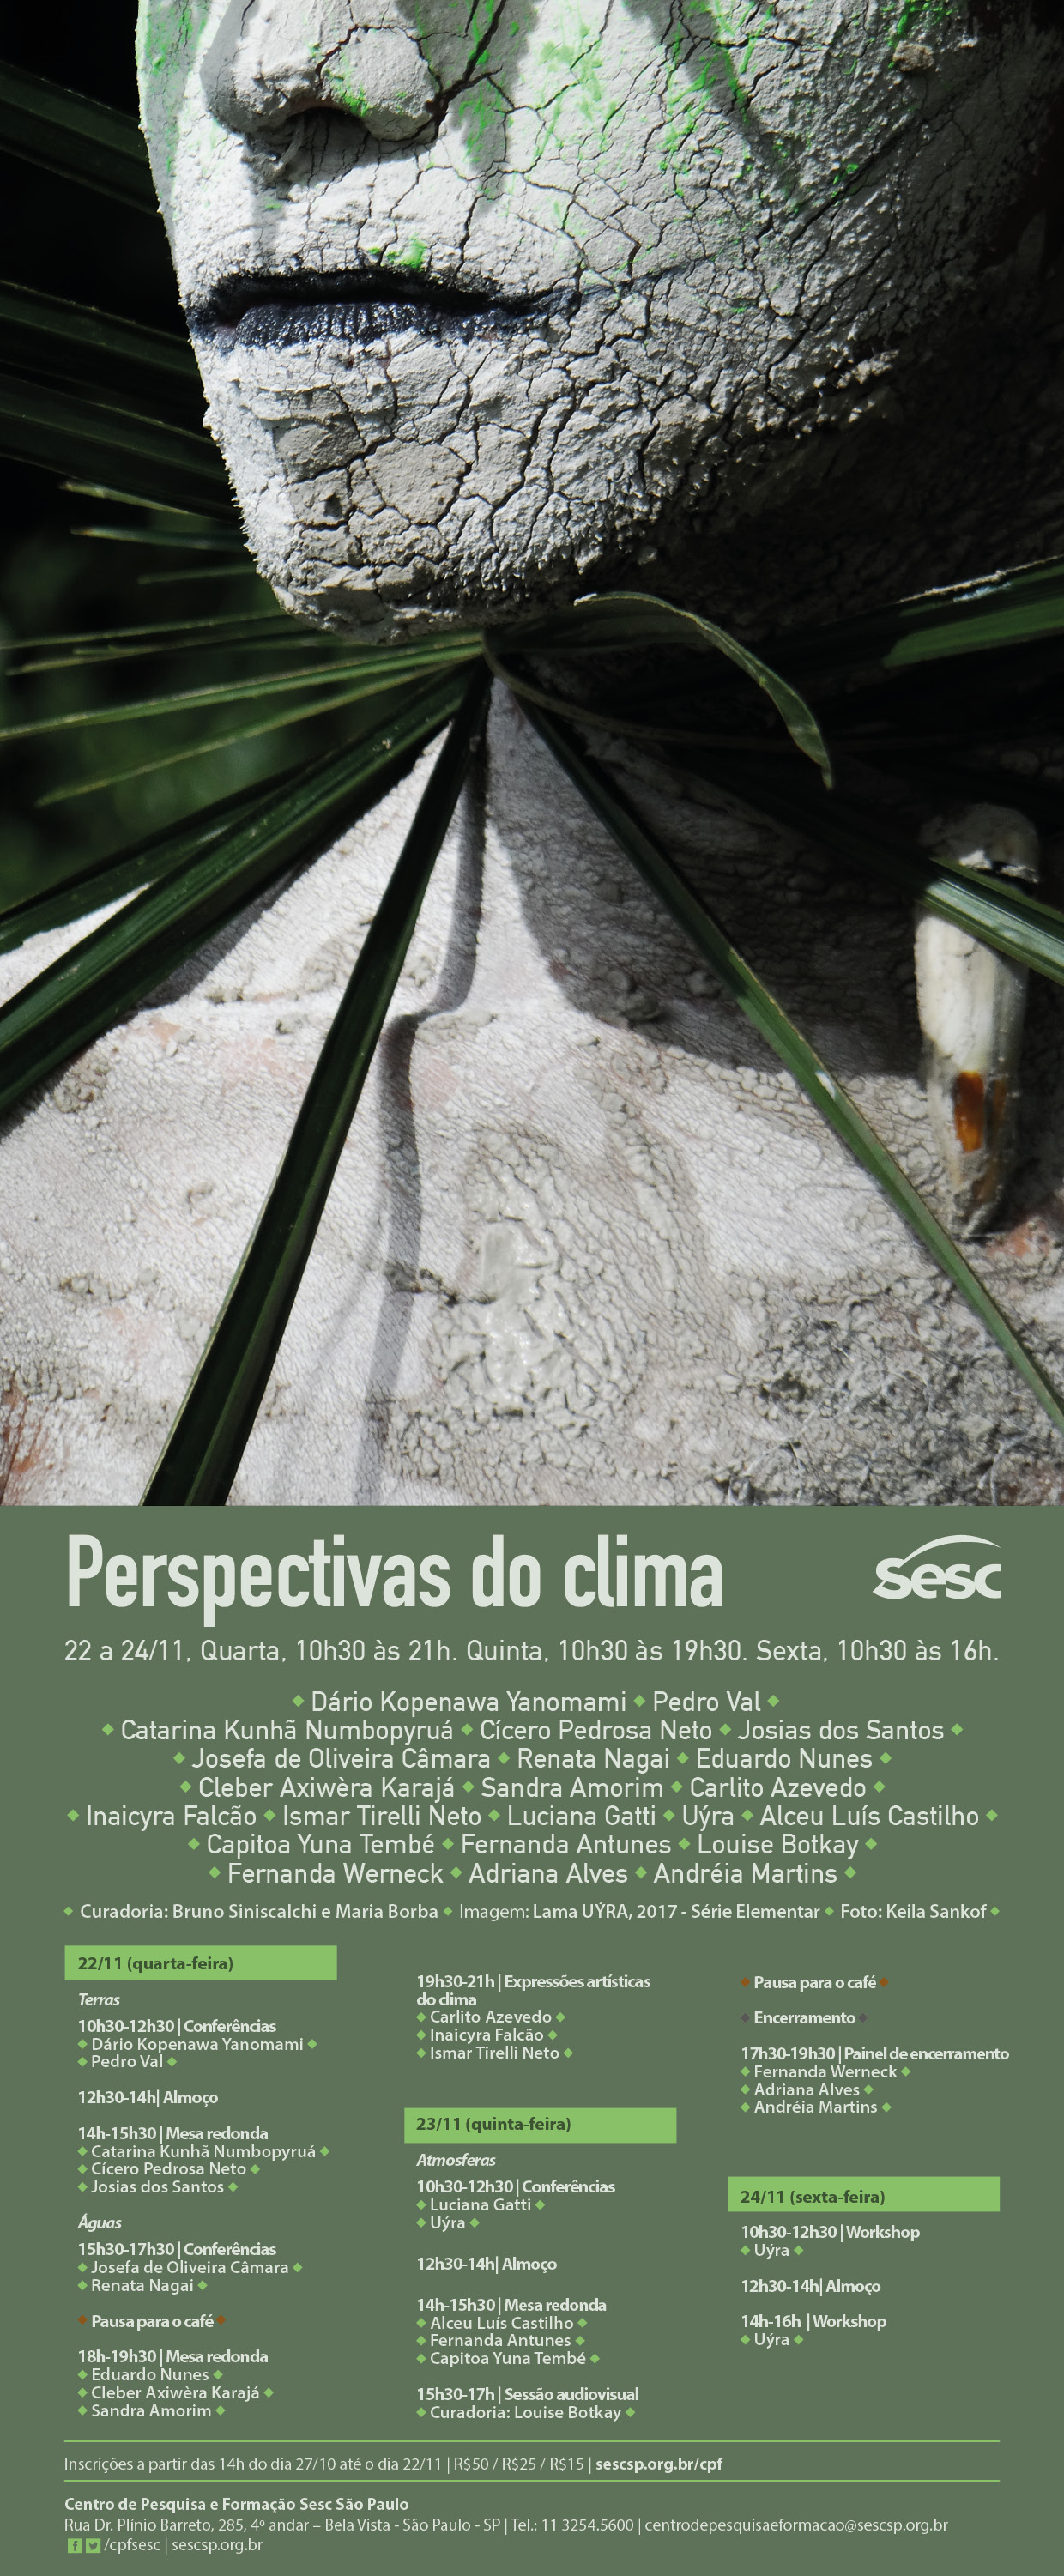 Climate perspectives - International seminar